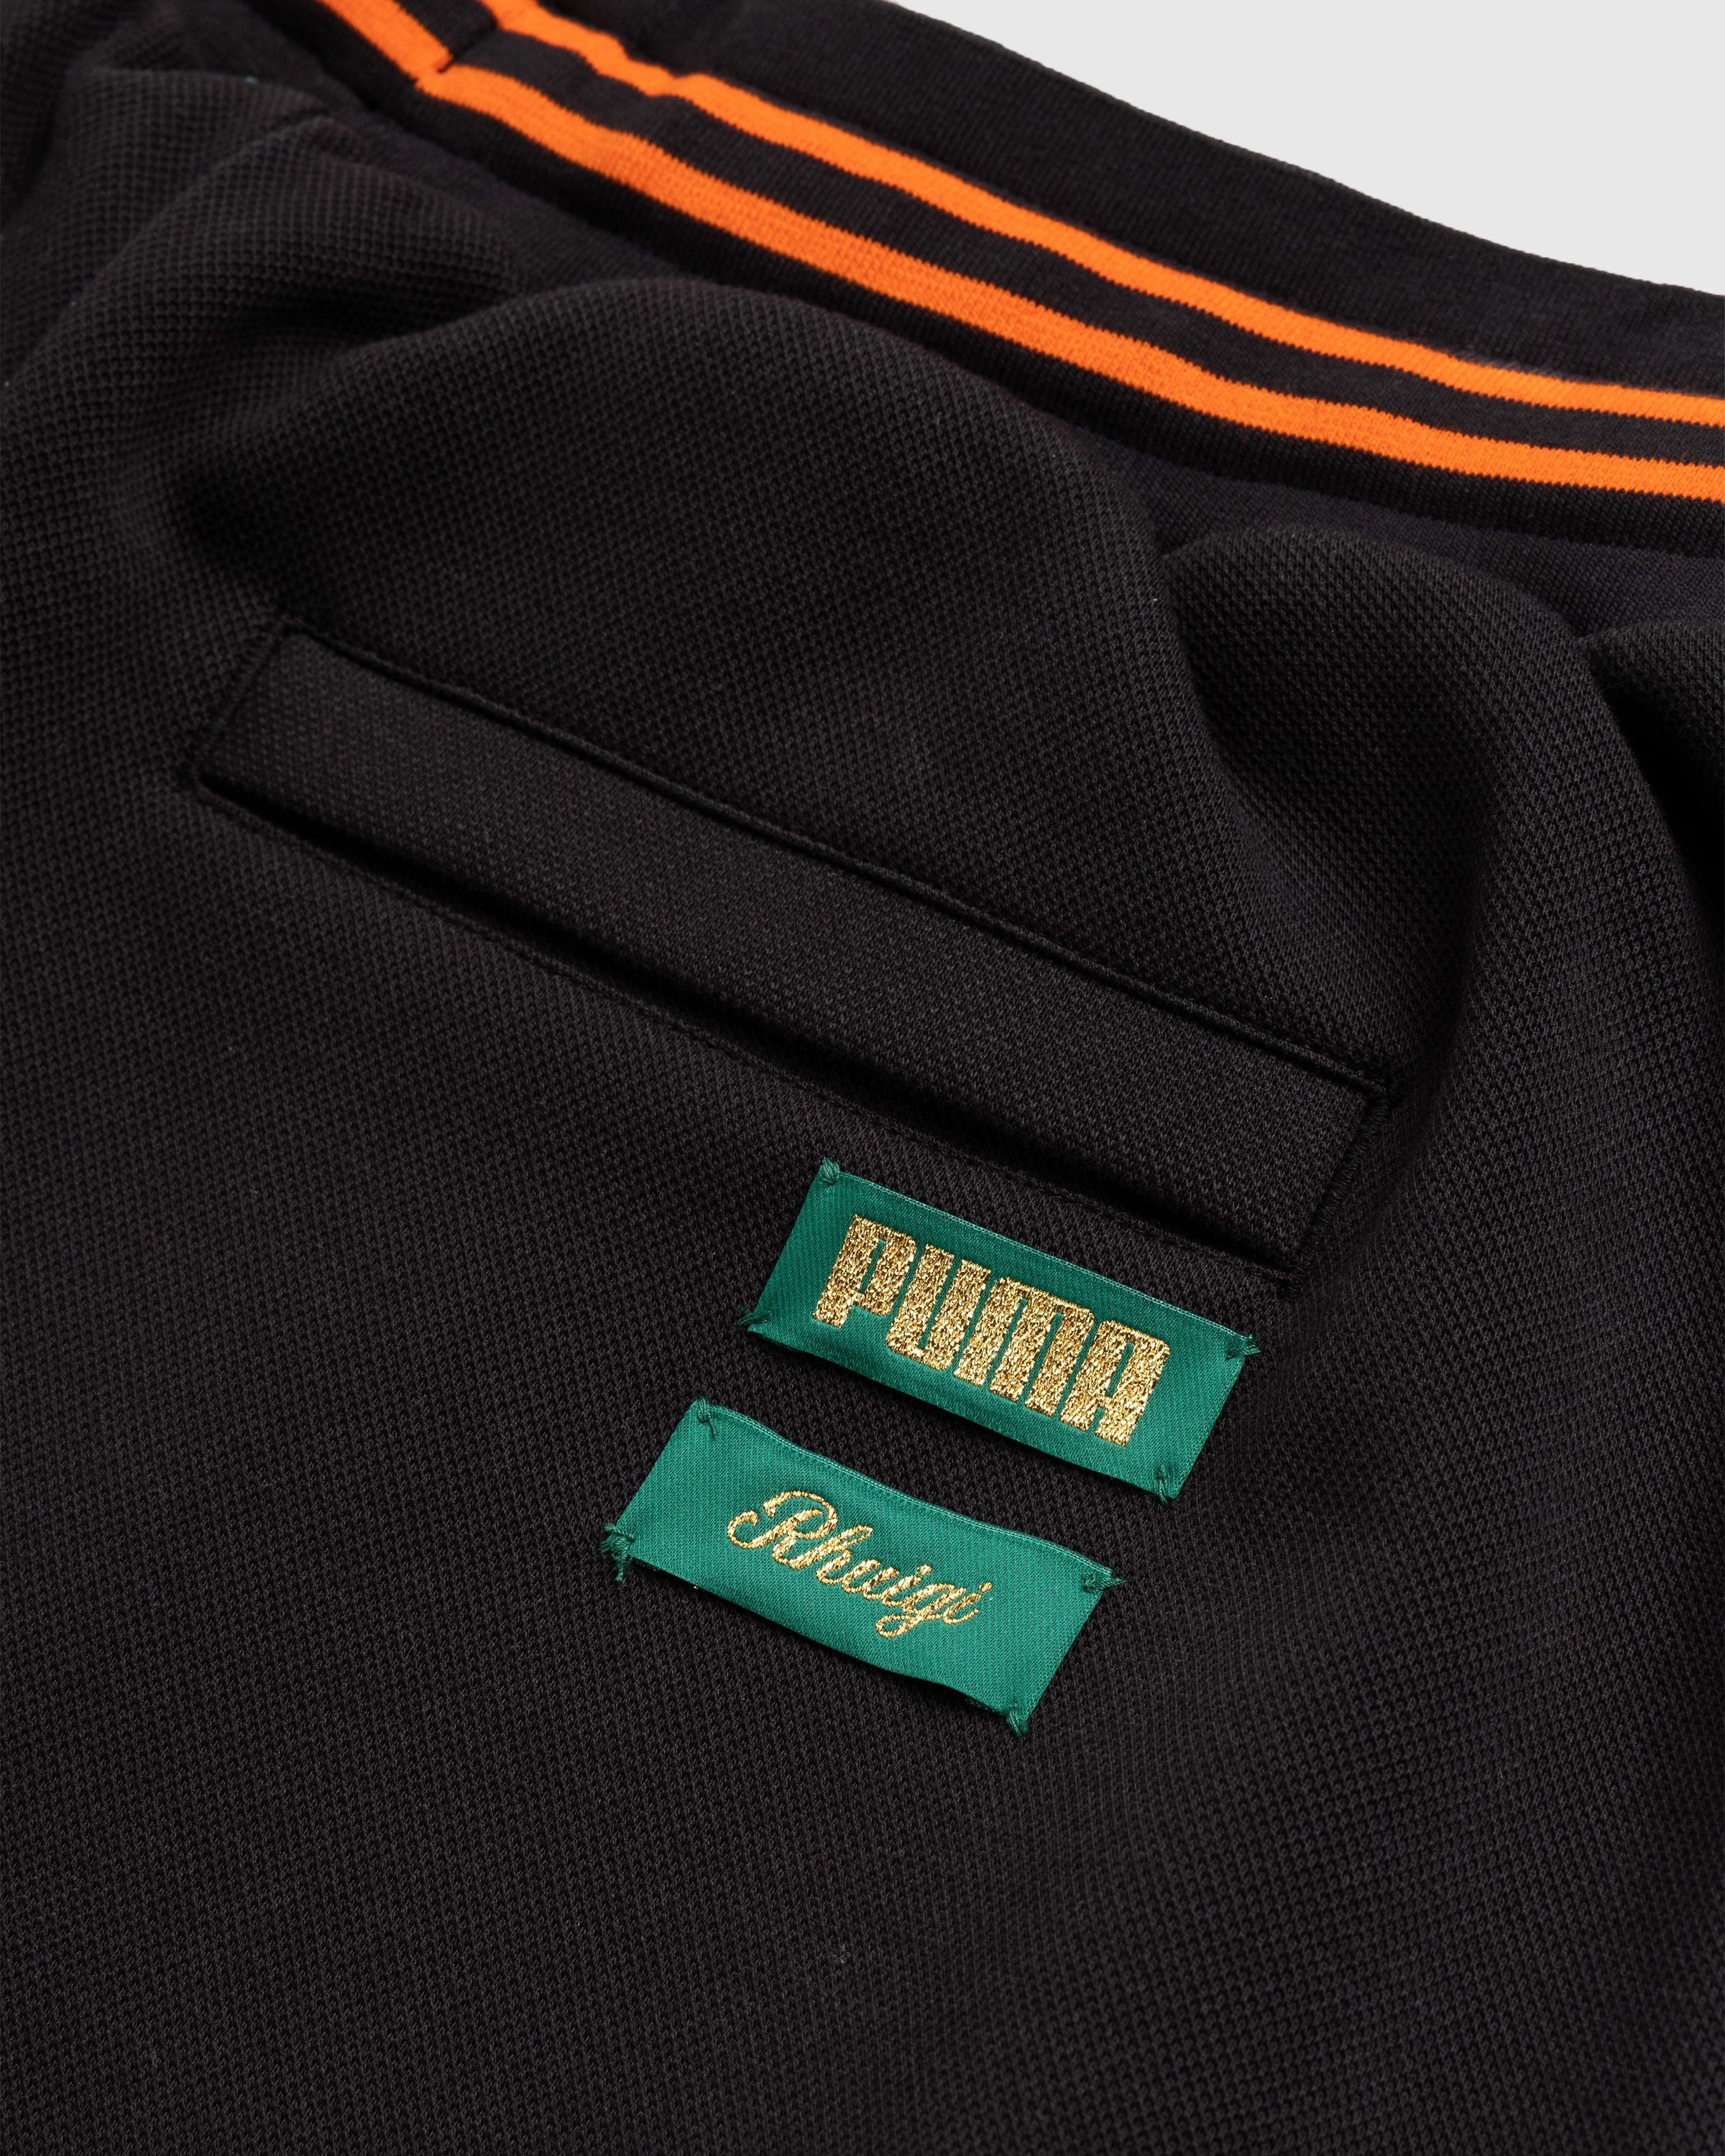 Puma x Rhuigi – Basketball Shorts Black - Size M